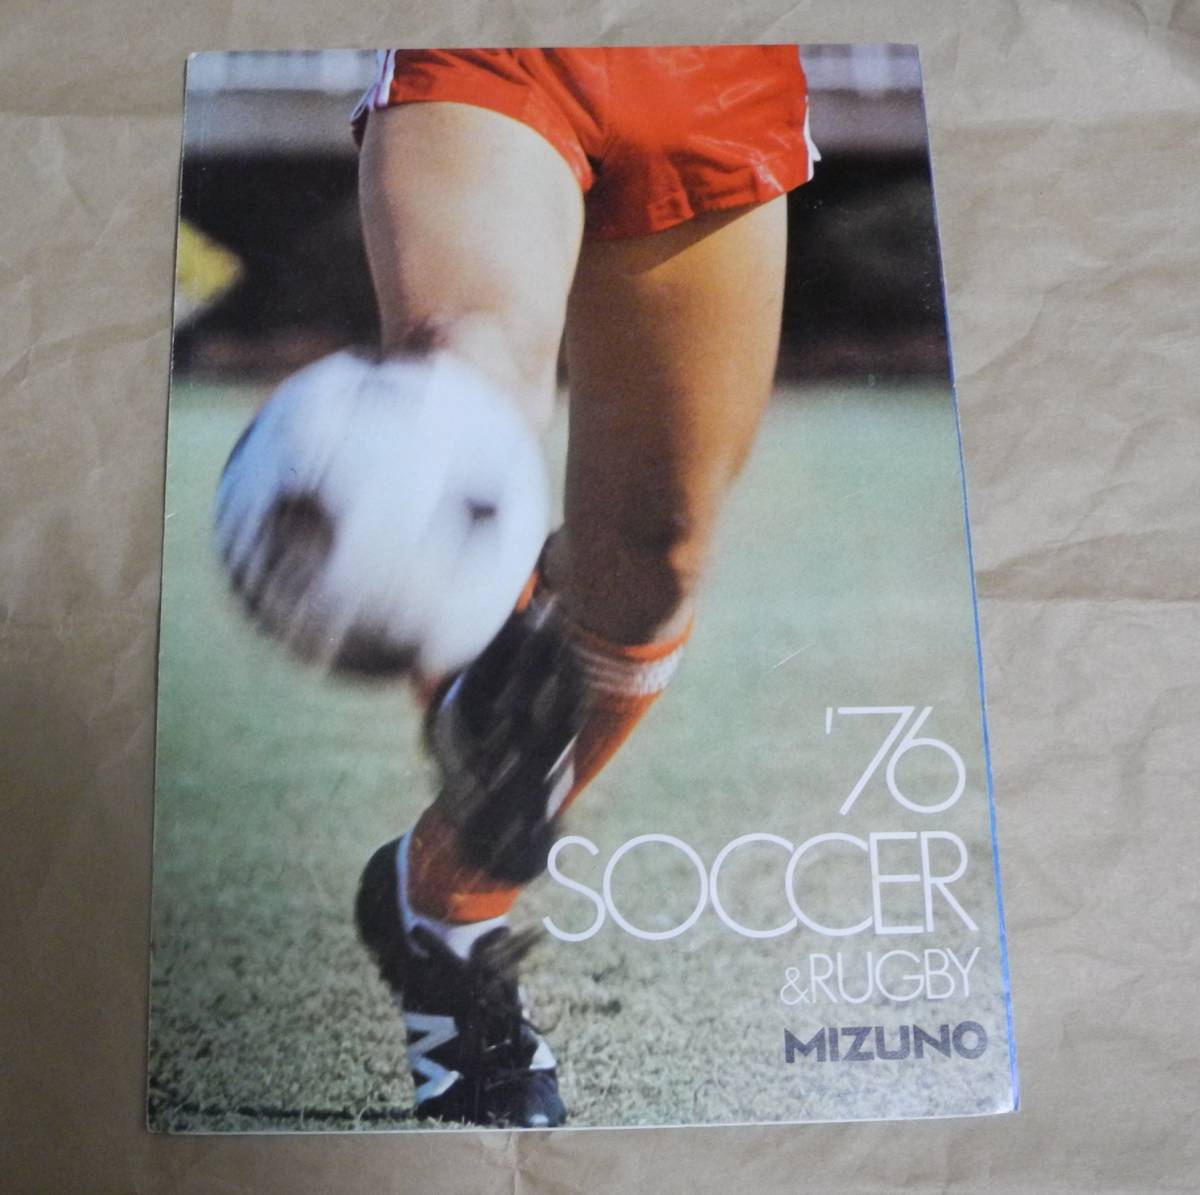  free shipping 1976 year Mizuno soccer catalog spike shoes ball wear mizuno soccer football rugby catalog shoes ball